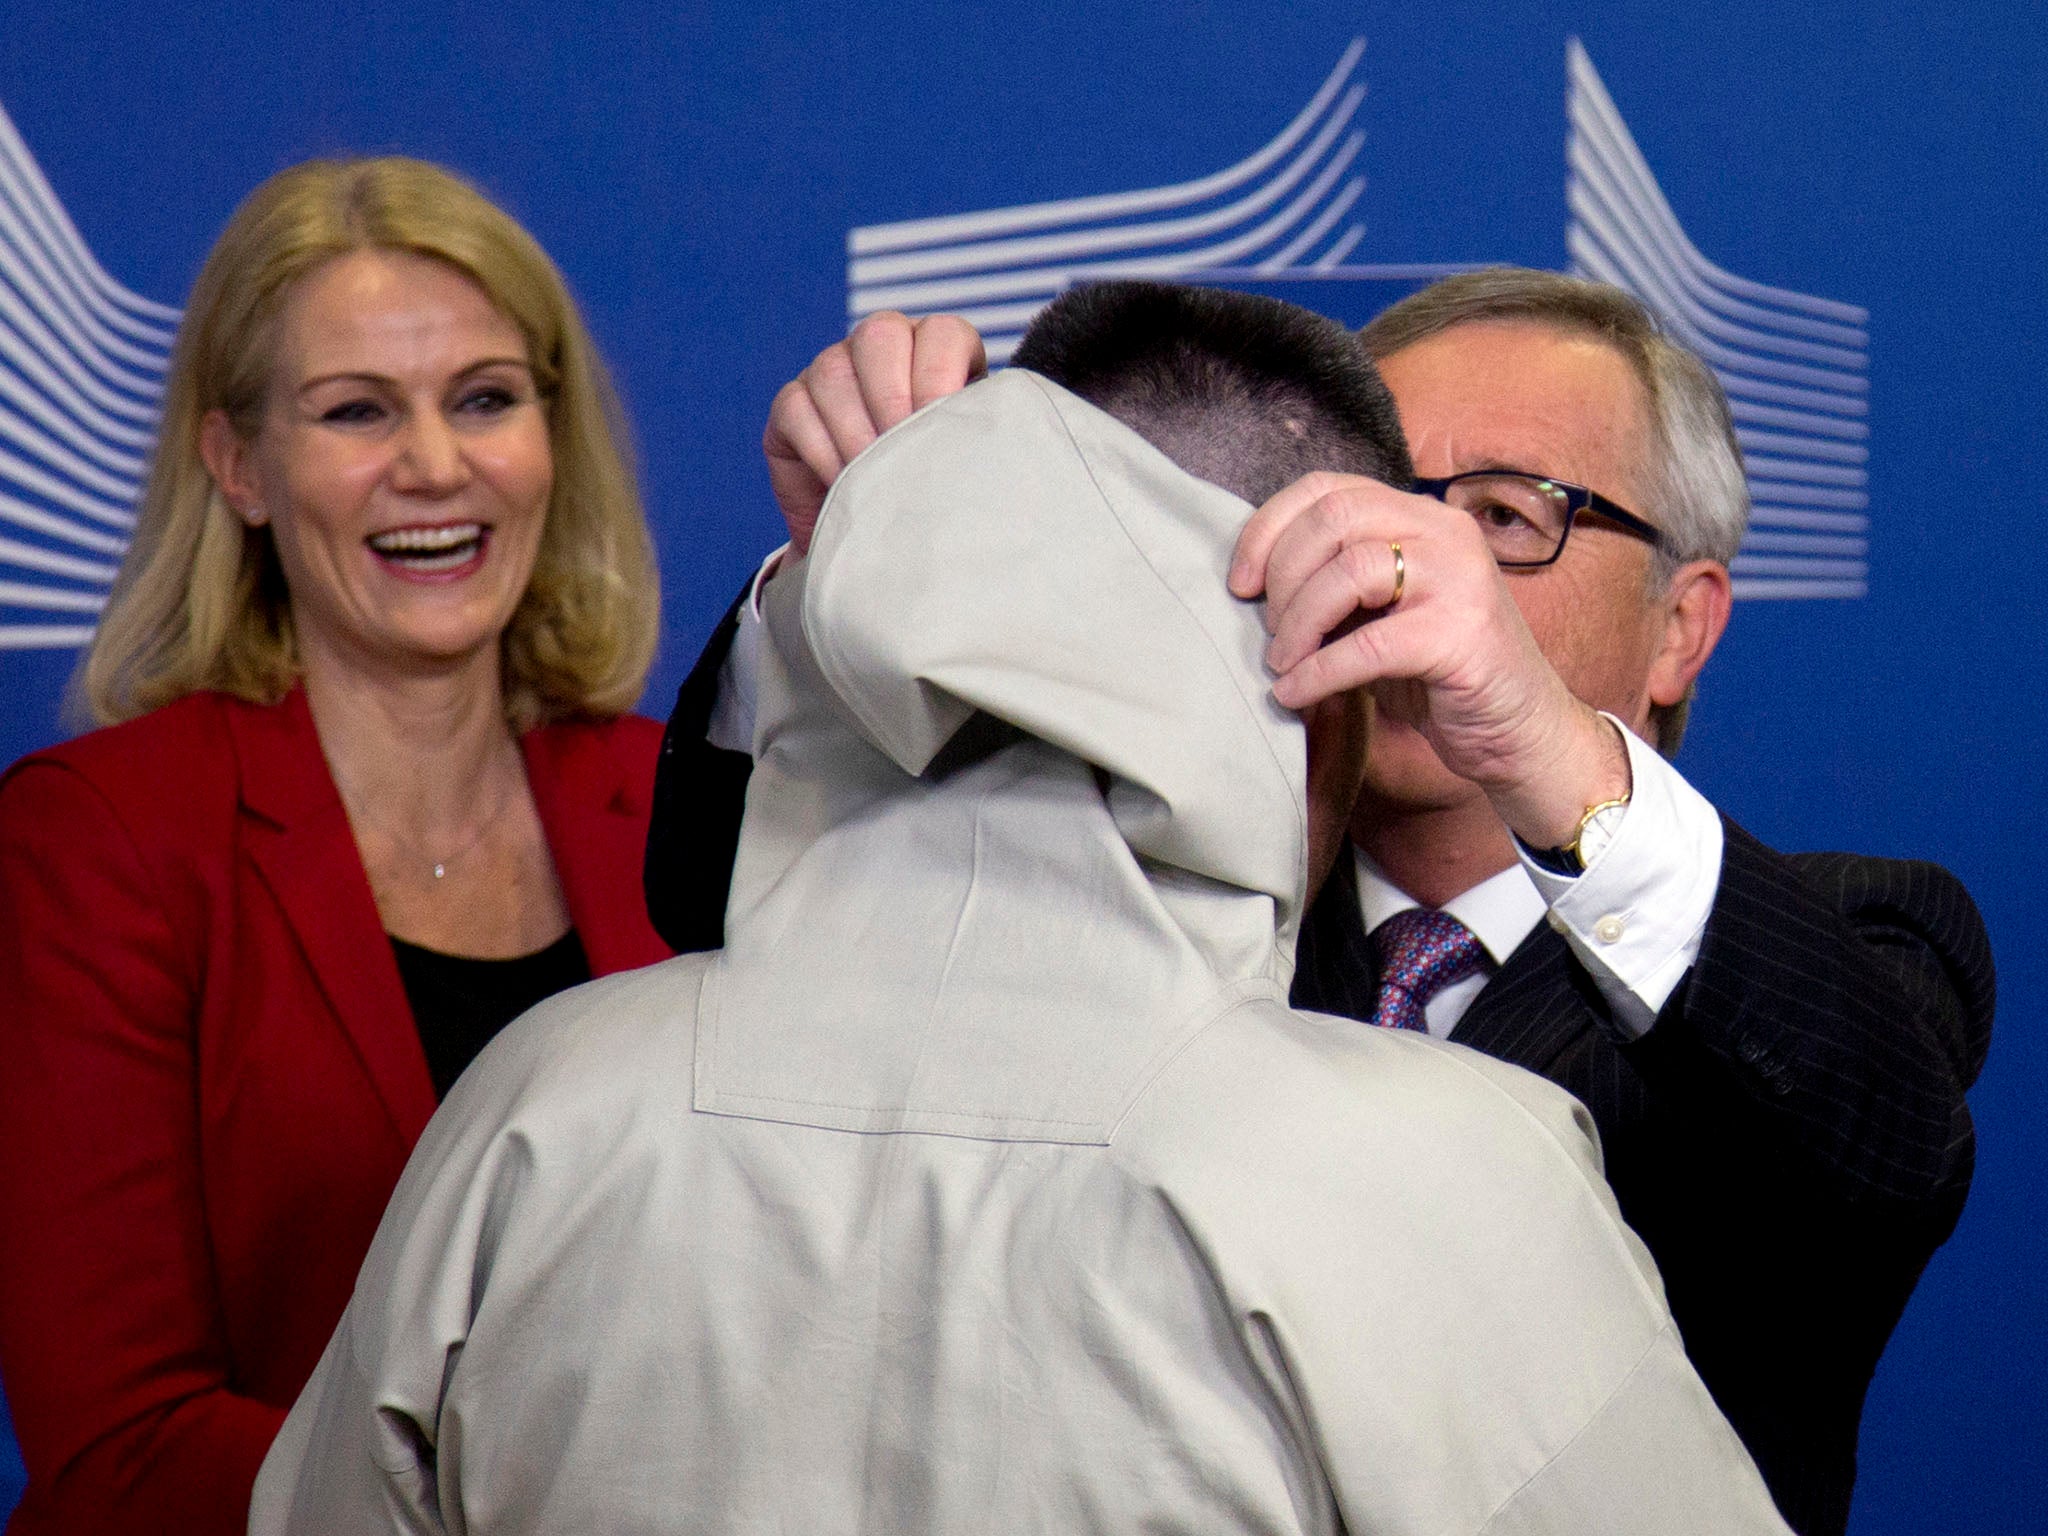 Helle Thorning-Schmidt looks on as Jean-Claude Juncker adjusts Kim Kielsen’s ‘hood’